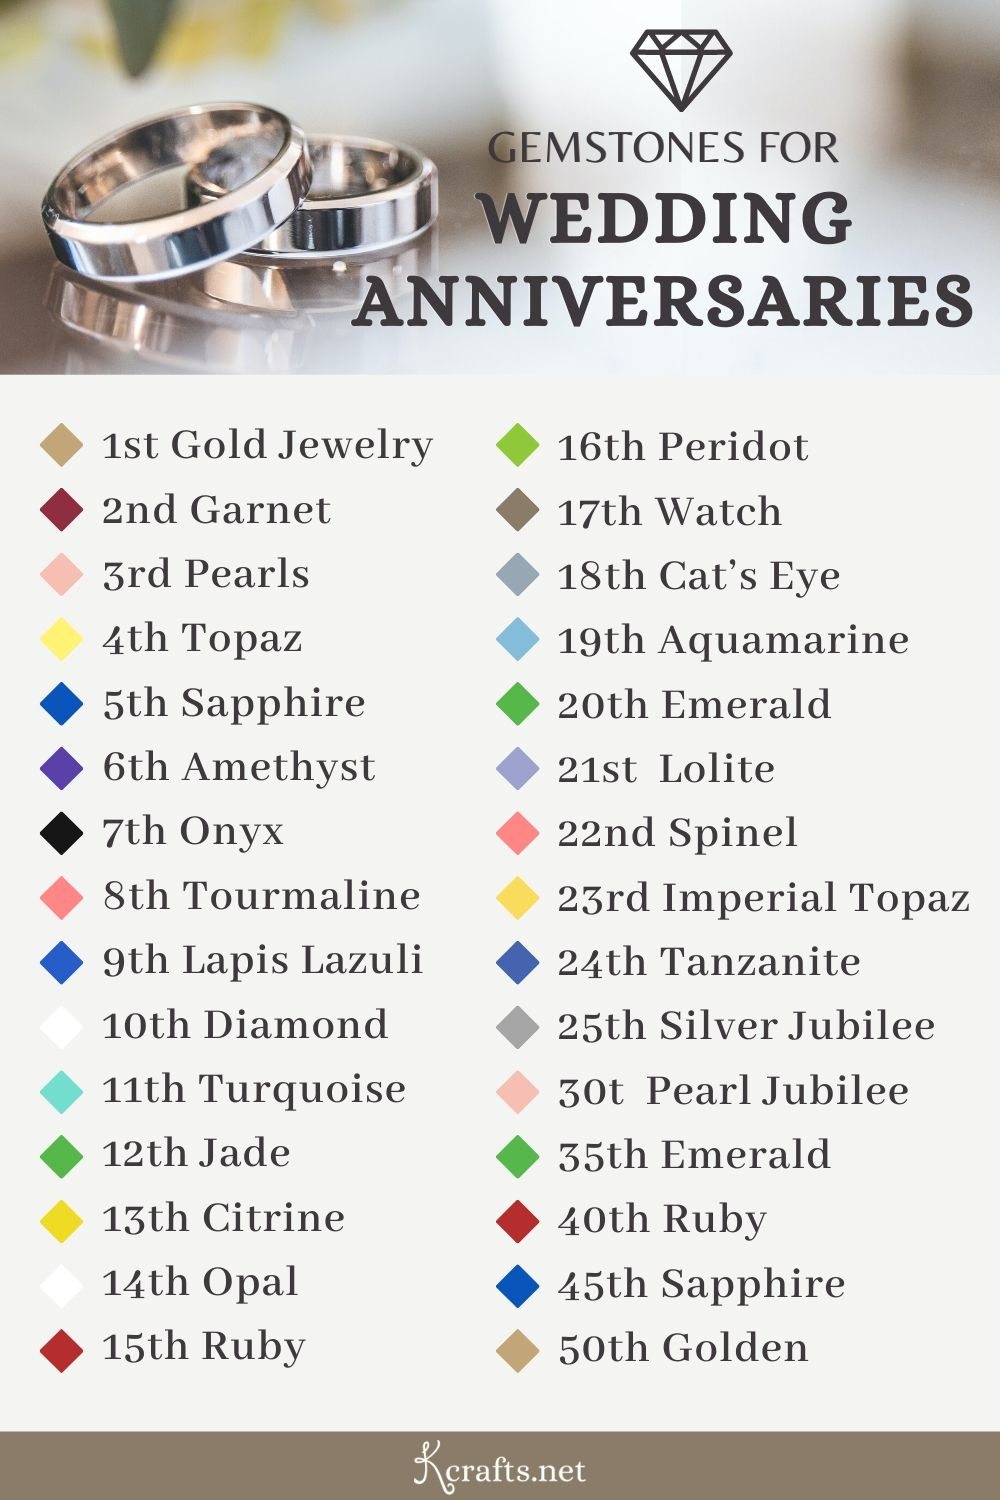 Ultimate List of Anniversary Gemstones